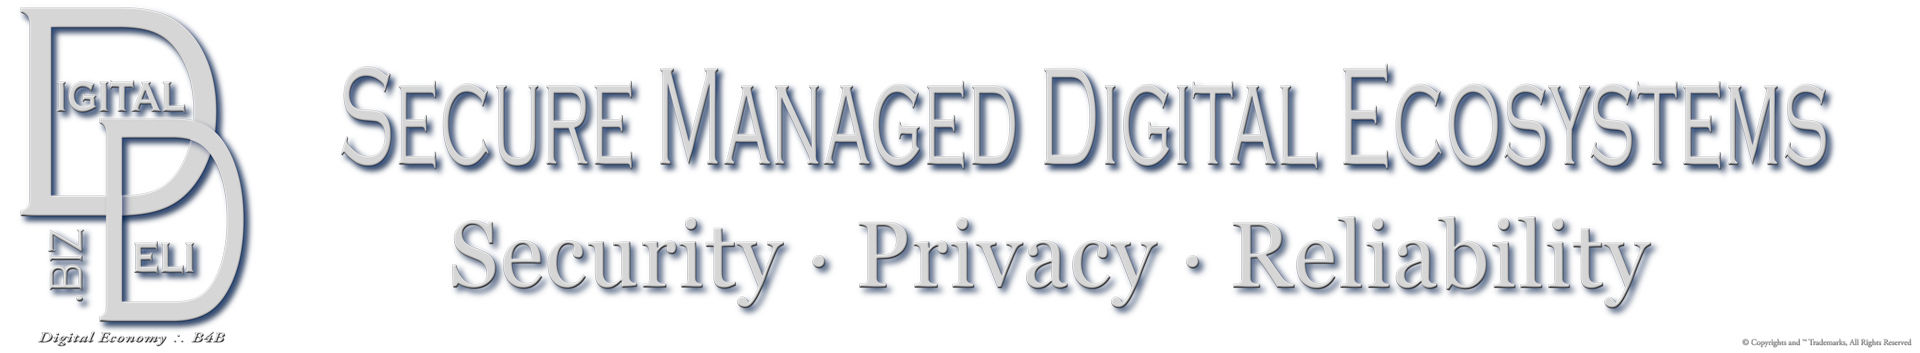 DigitalDeli.biz Properties & Brands Imprint, Secure Managed Digital Ecosystems